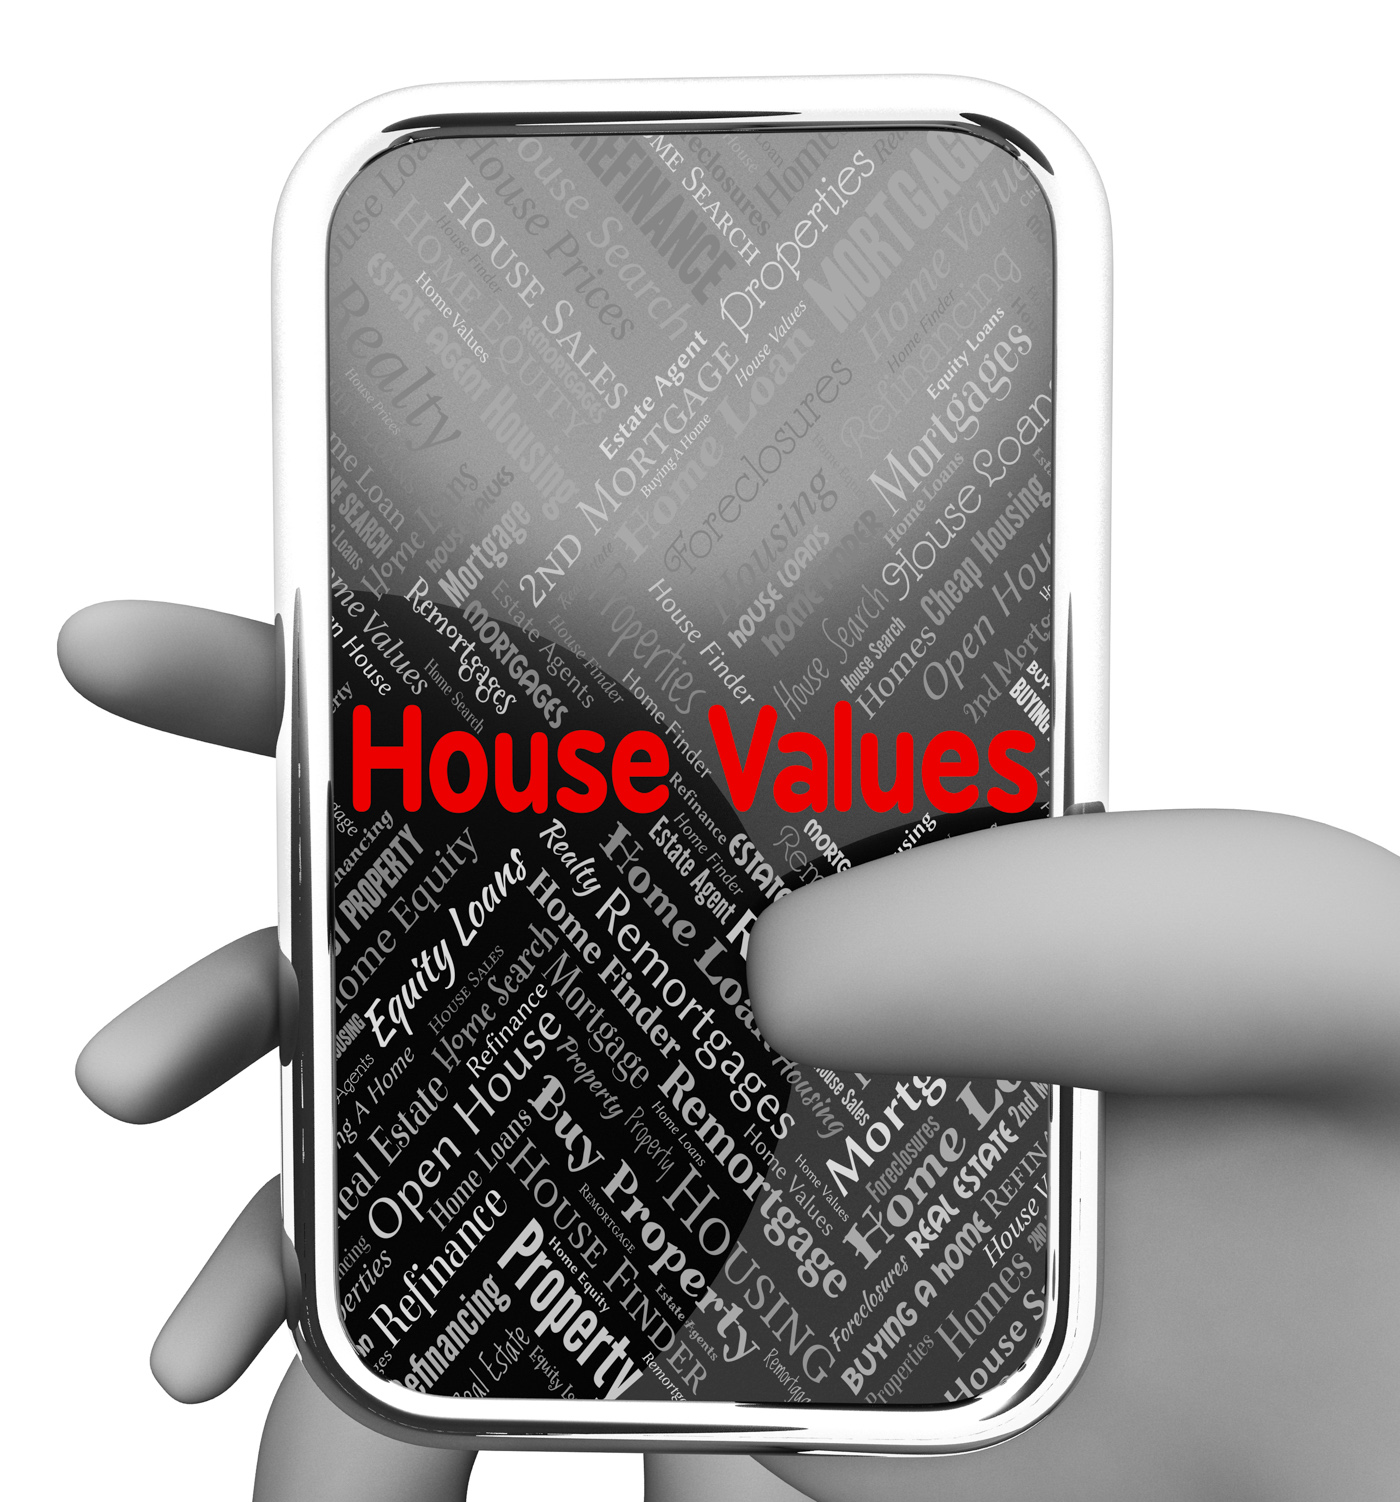 House values indicates web site and amount photo